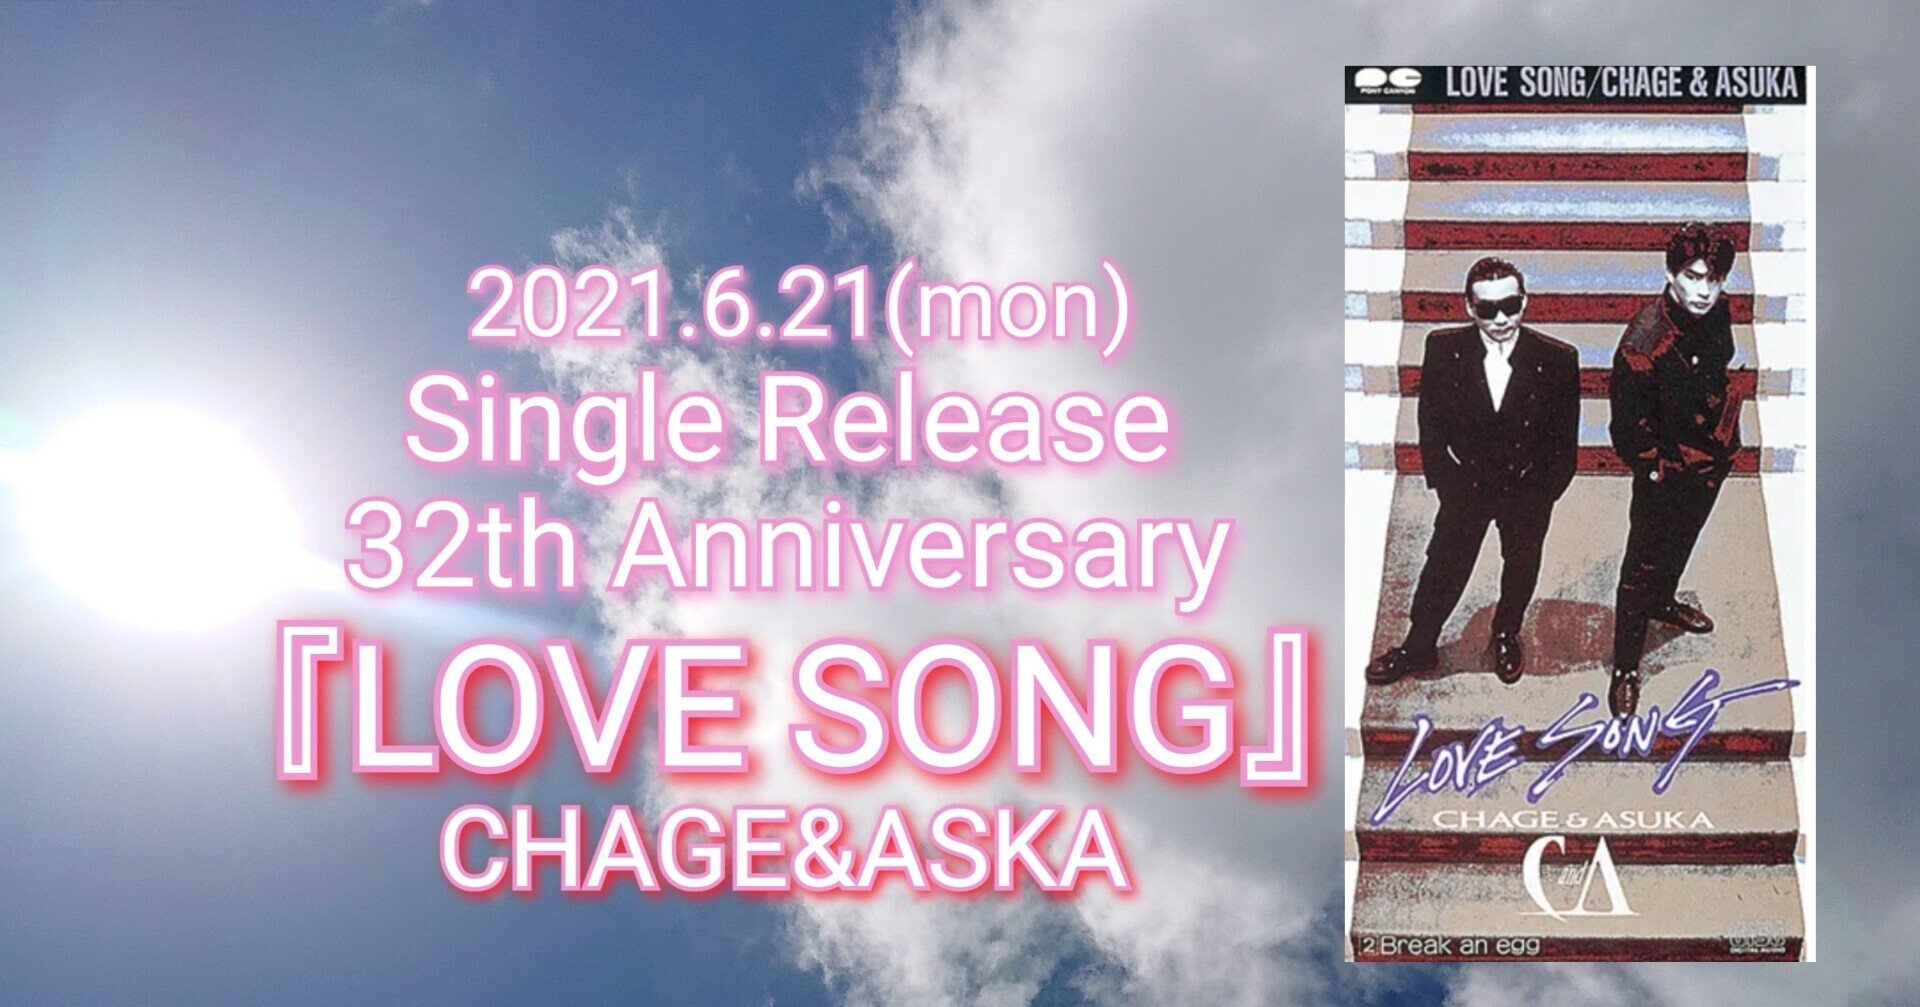 Chage Aska シングル Love Song 発売32周年記念日 ねね 杏寿 旧ひまわり 洋ちゃん Note